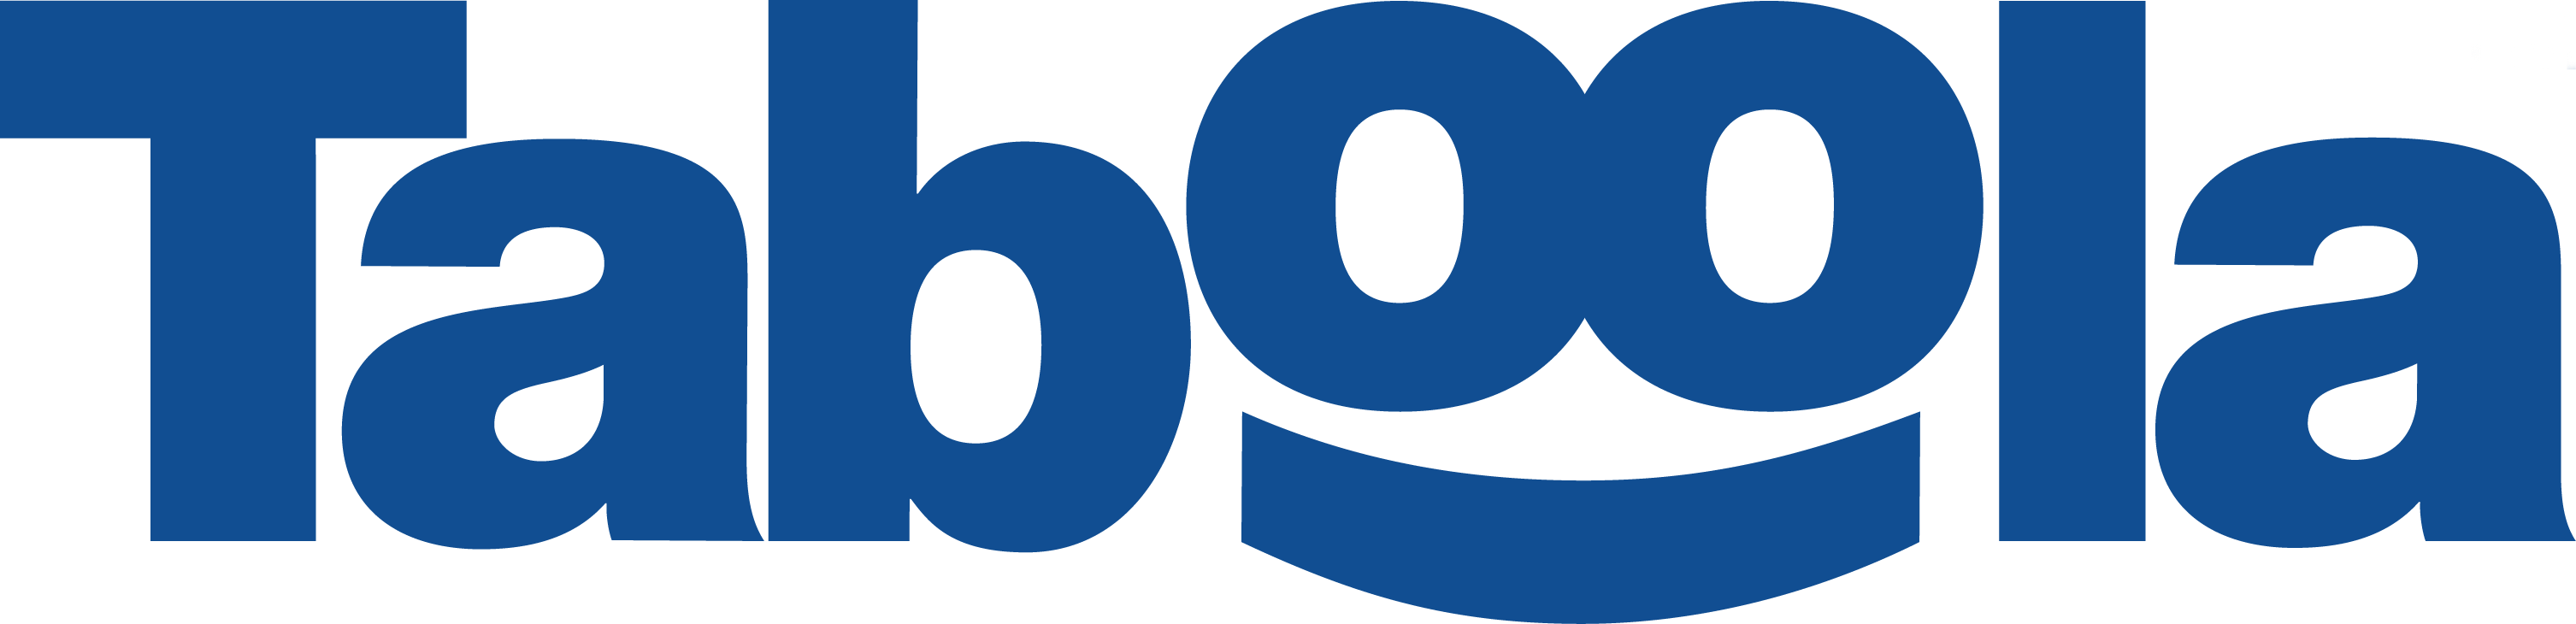 tabool logo